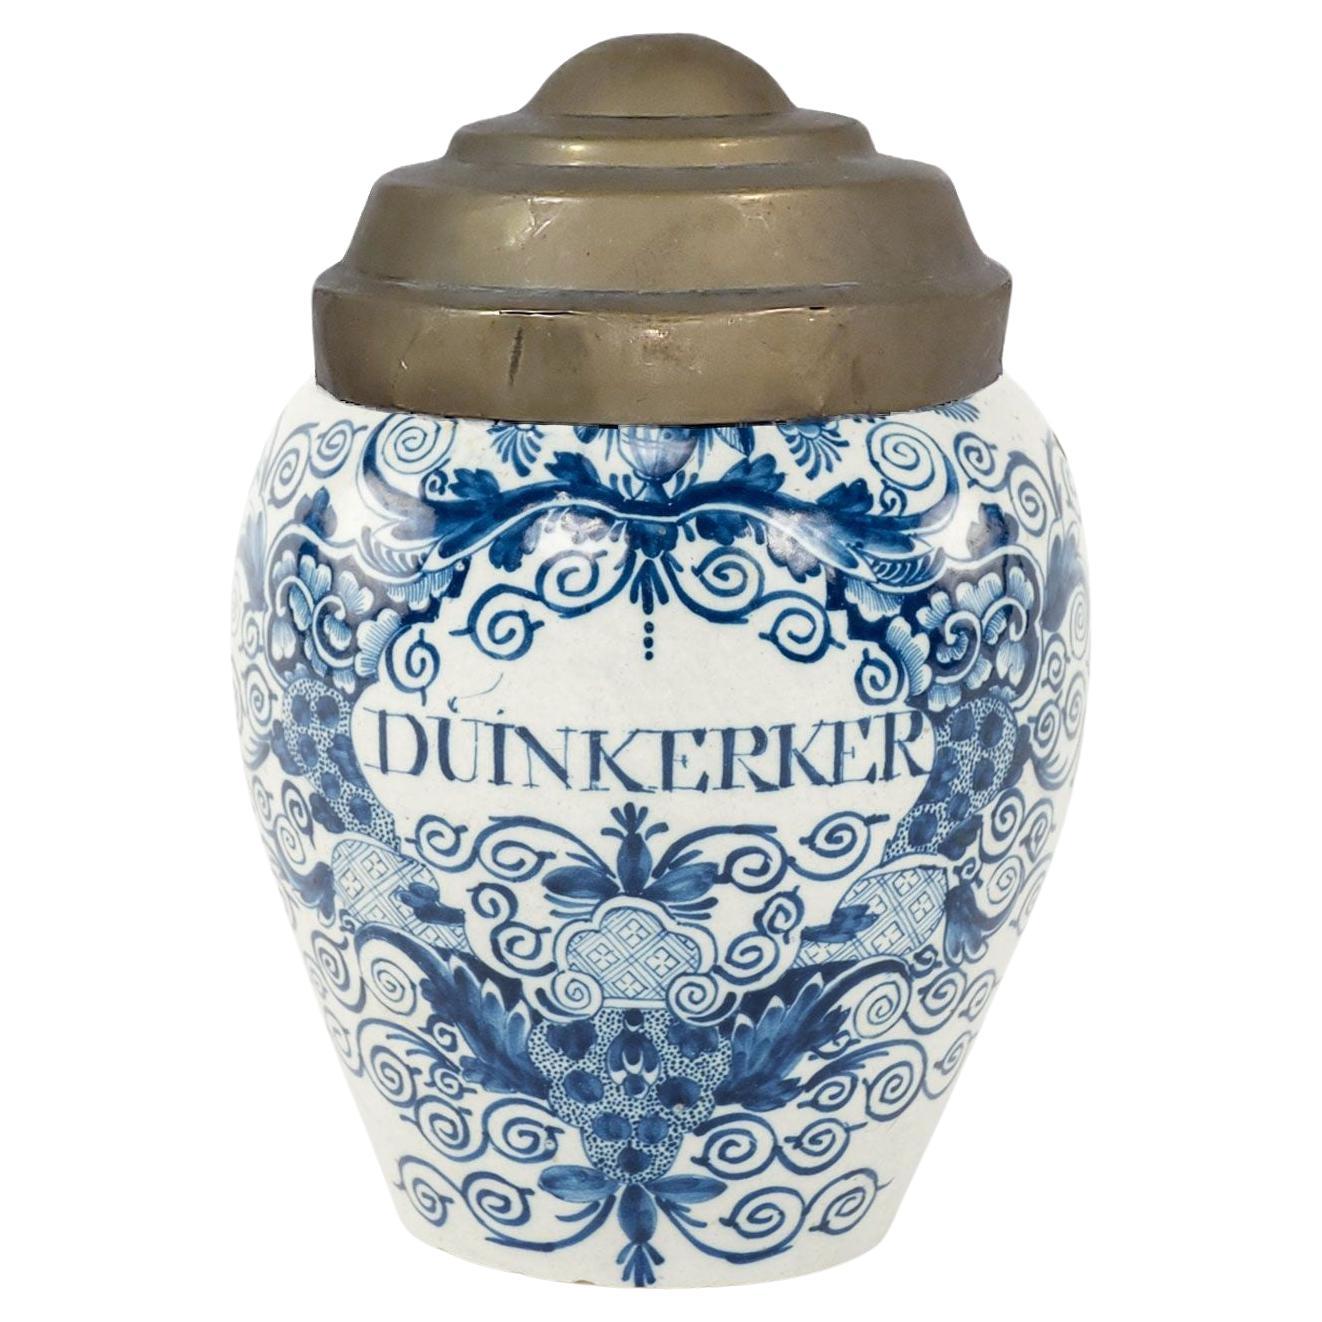 Delft Blue and White "Dunkerer" Tobacco Jar For Sale